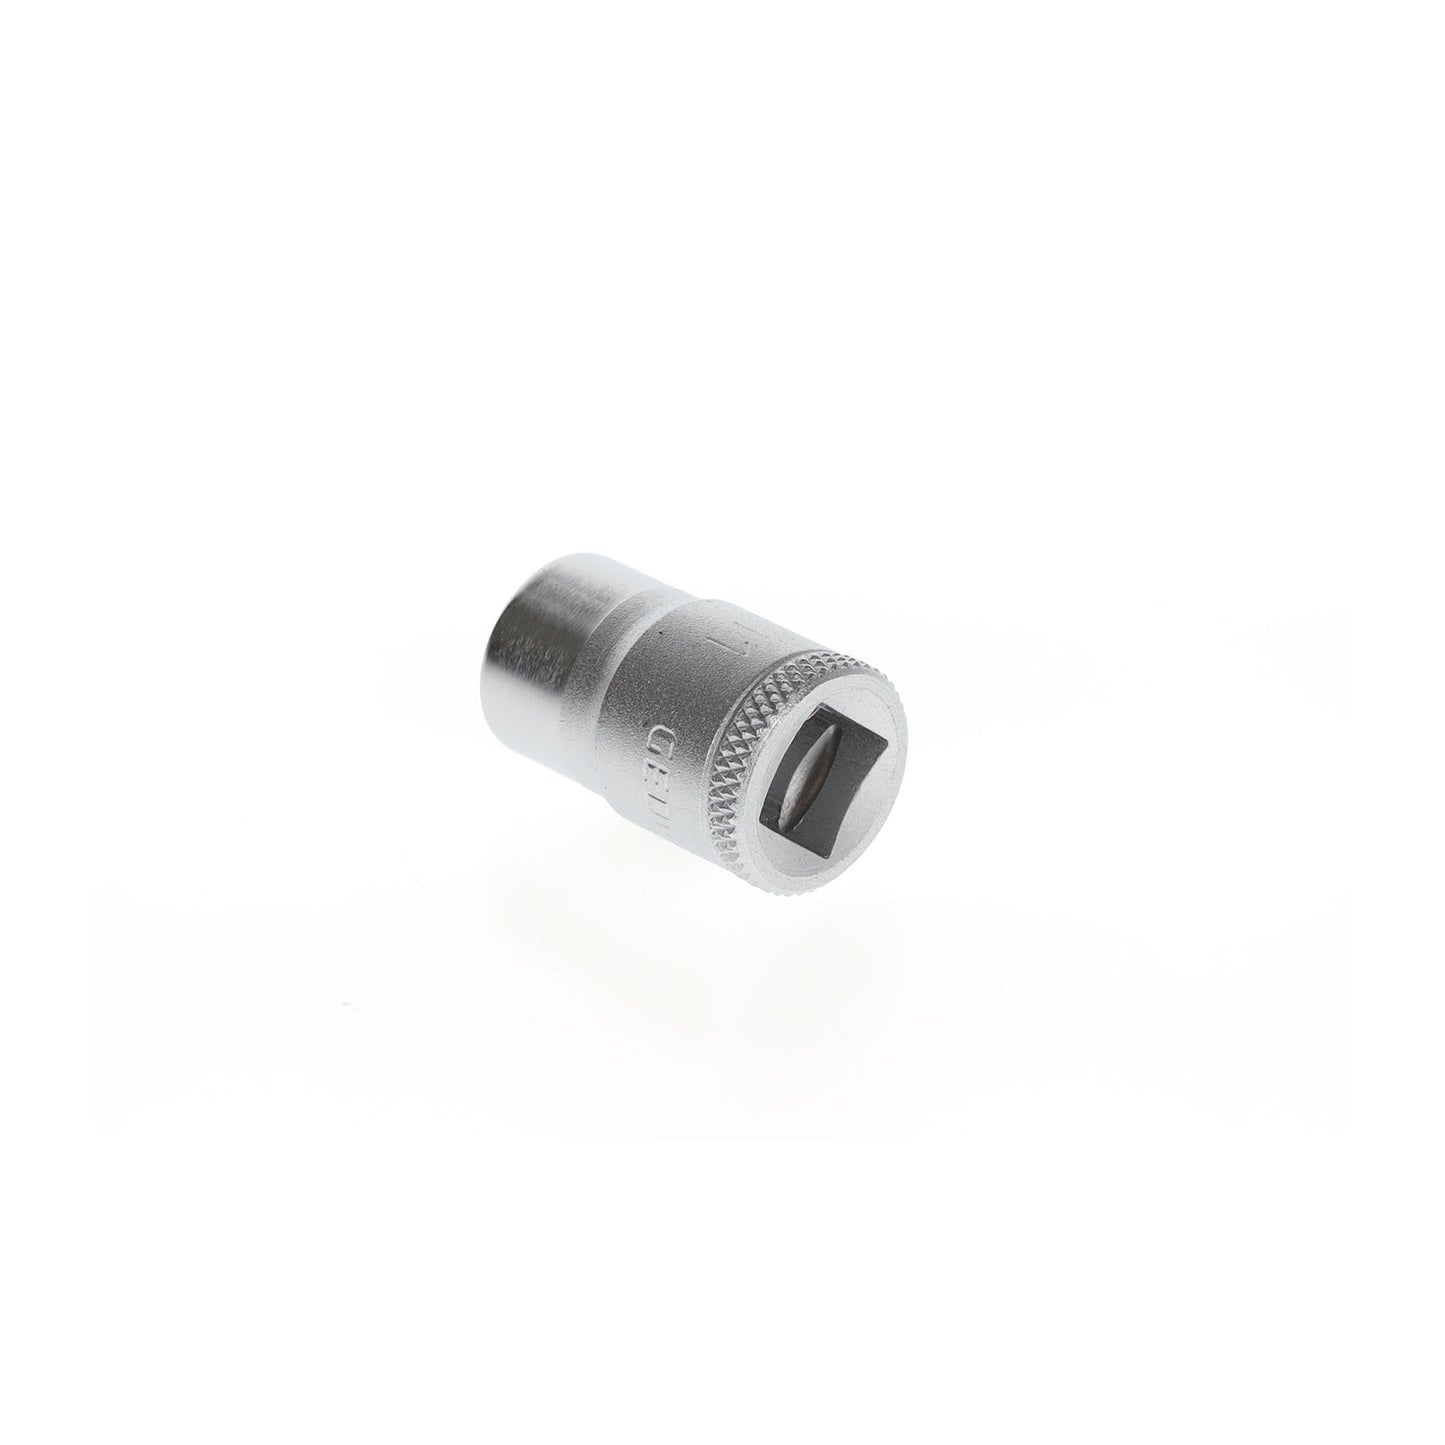 GEDORE 30 11 - Hexagonal socket 3/8", 11 mm (6233850)